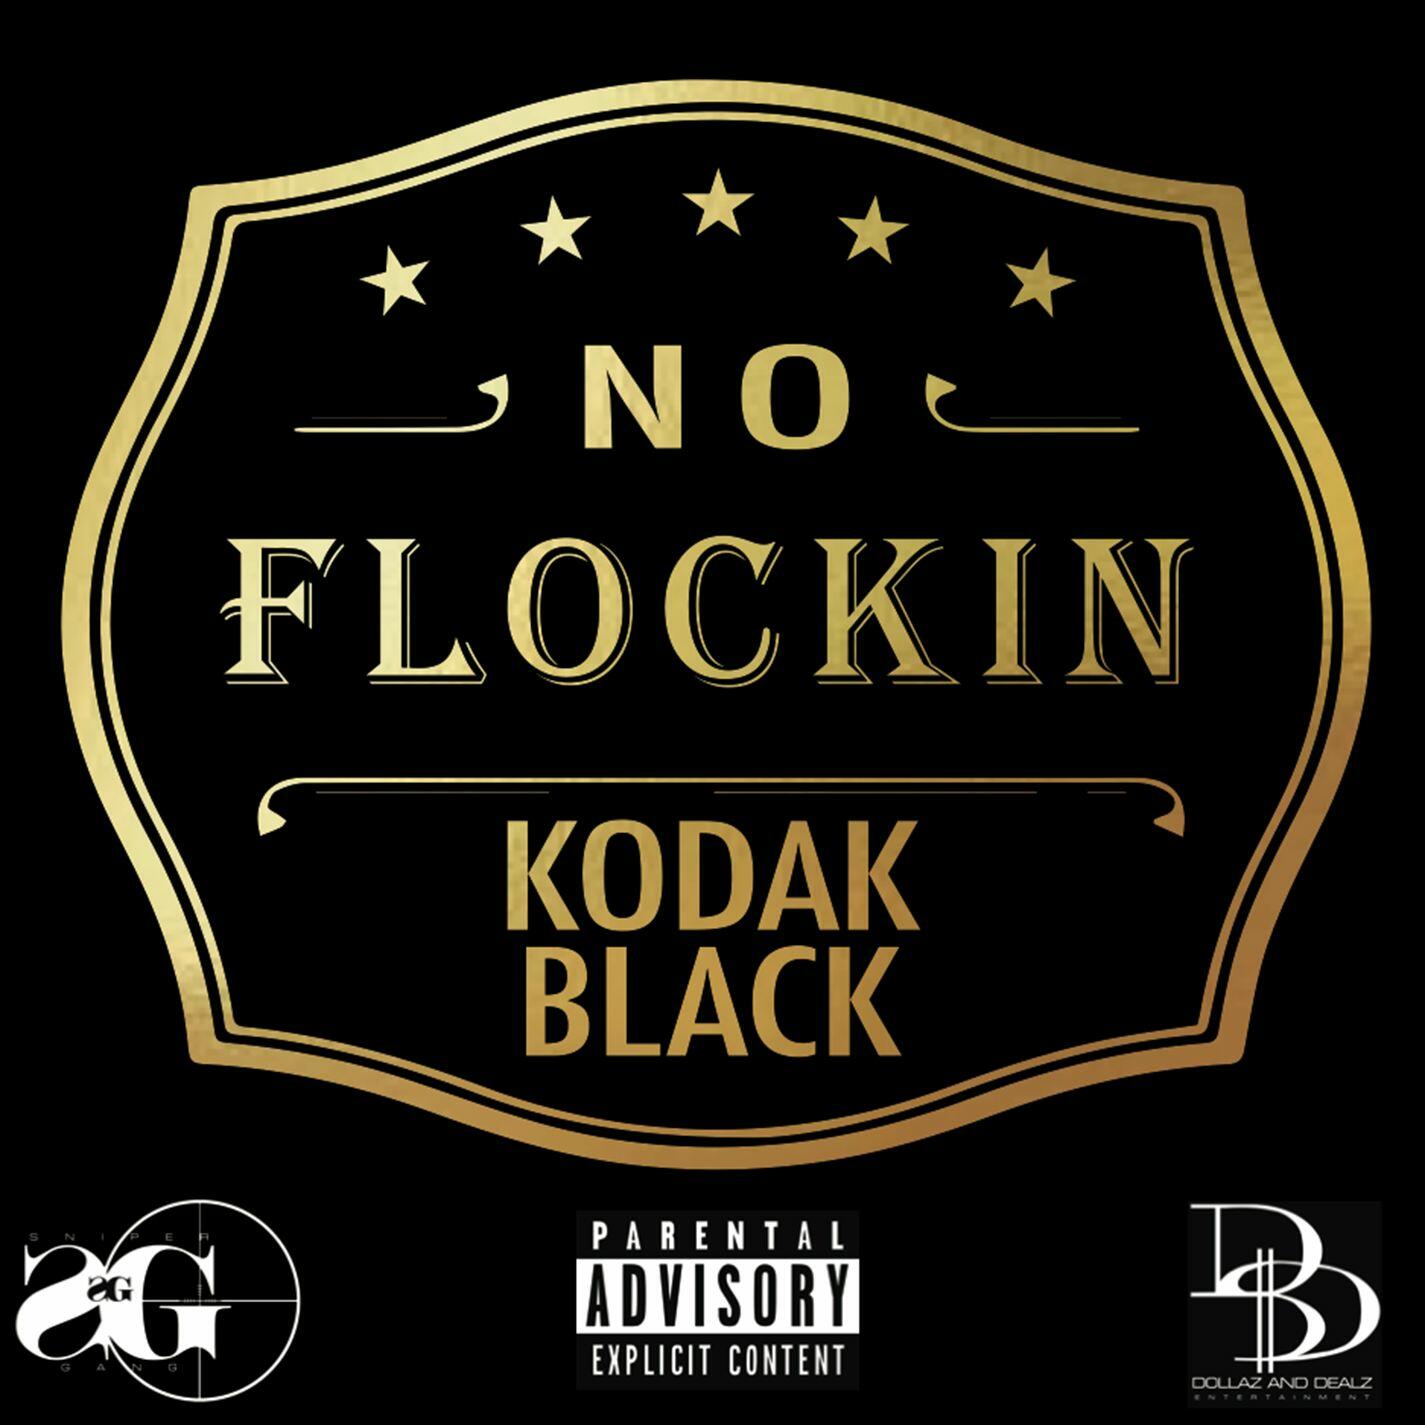 Listen Free to Kodak Black - No Flockin Radio on iHeartRadio | iHeartRadio